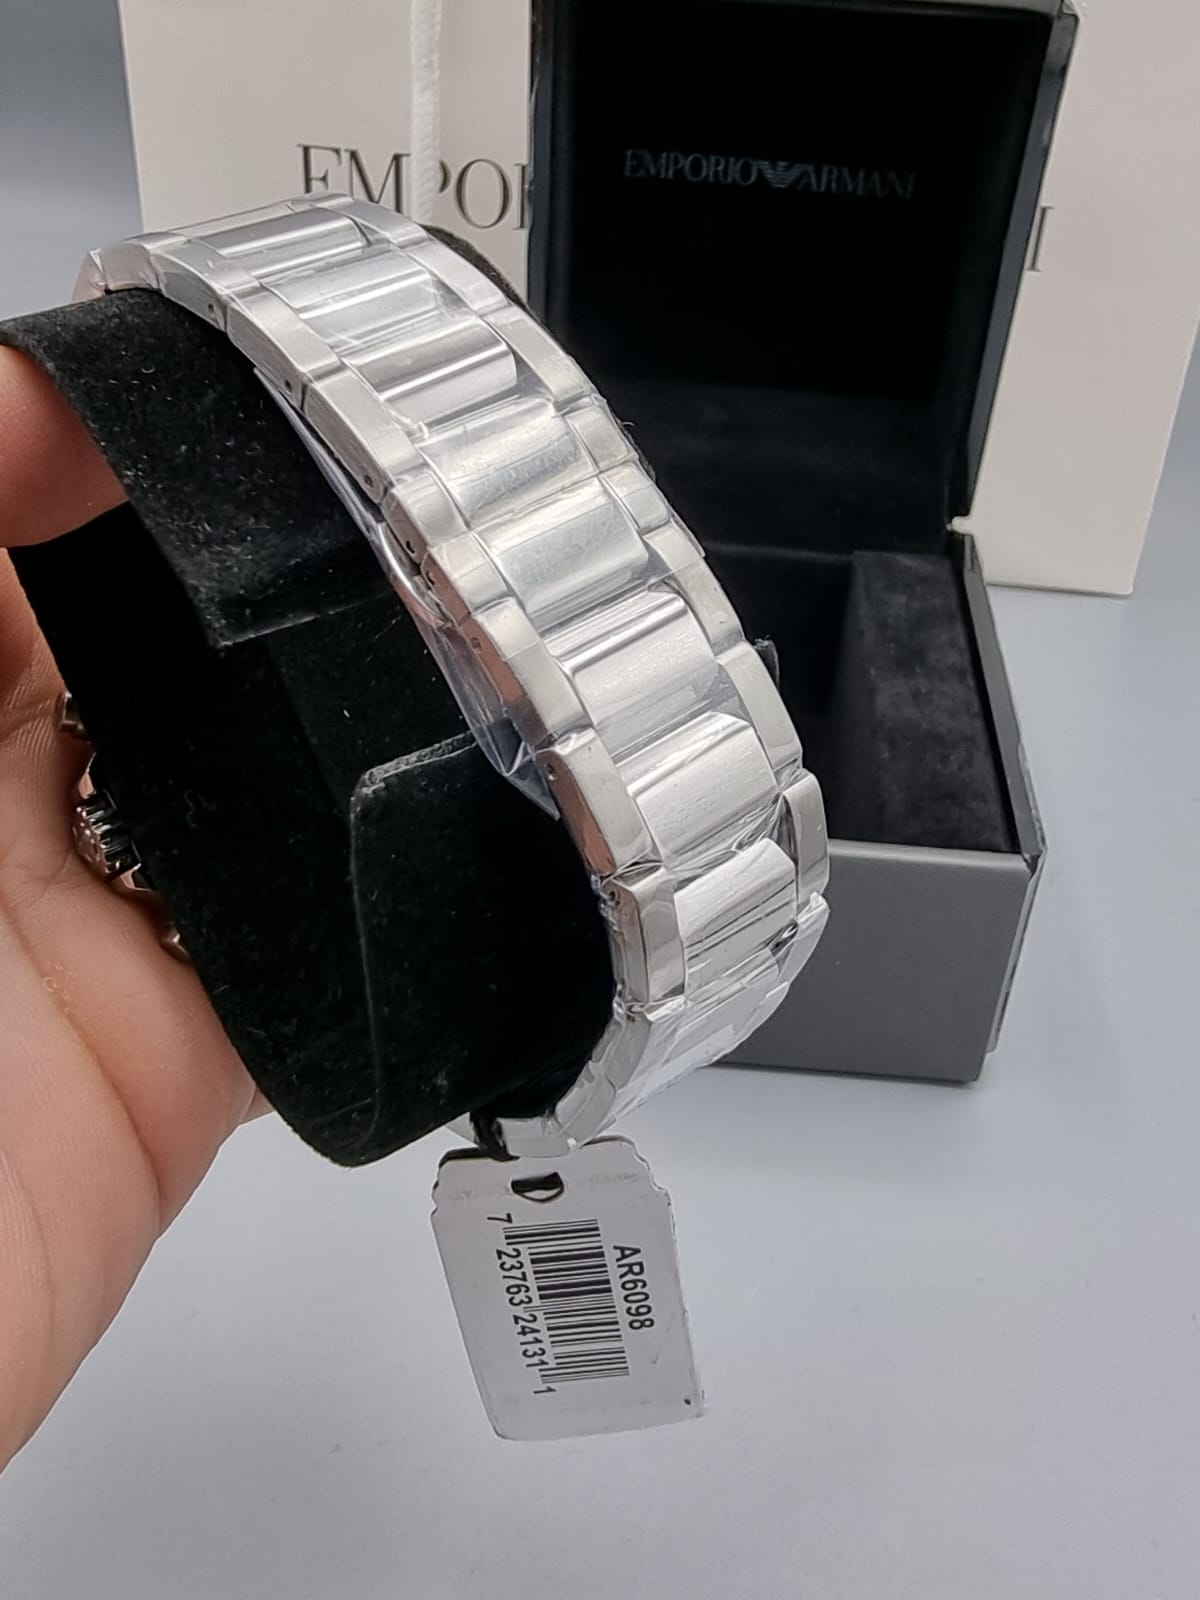 EMPORIO ARMANI Sigma Chronograph Quartz Black Dial Men's Watch AR6098